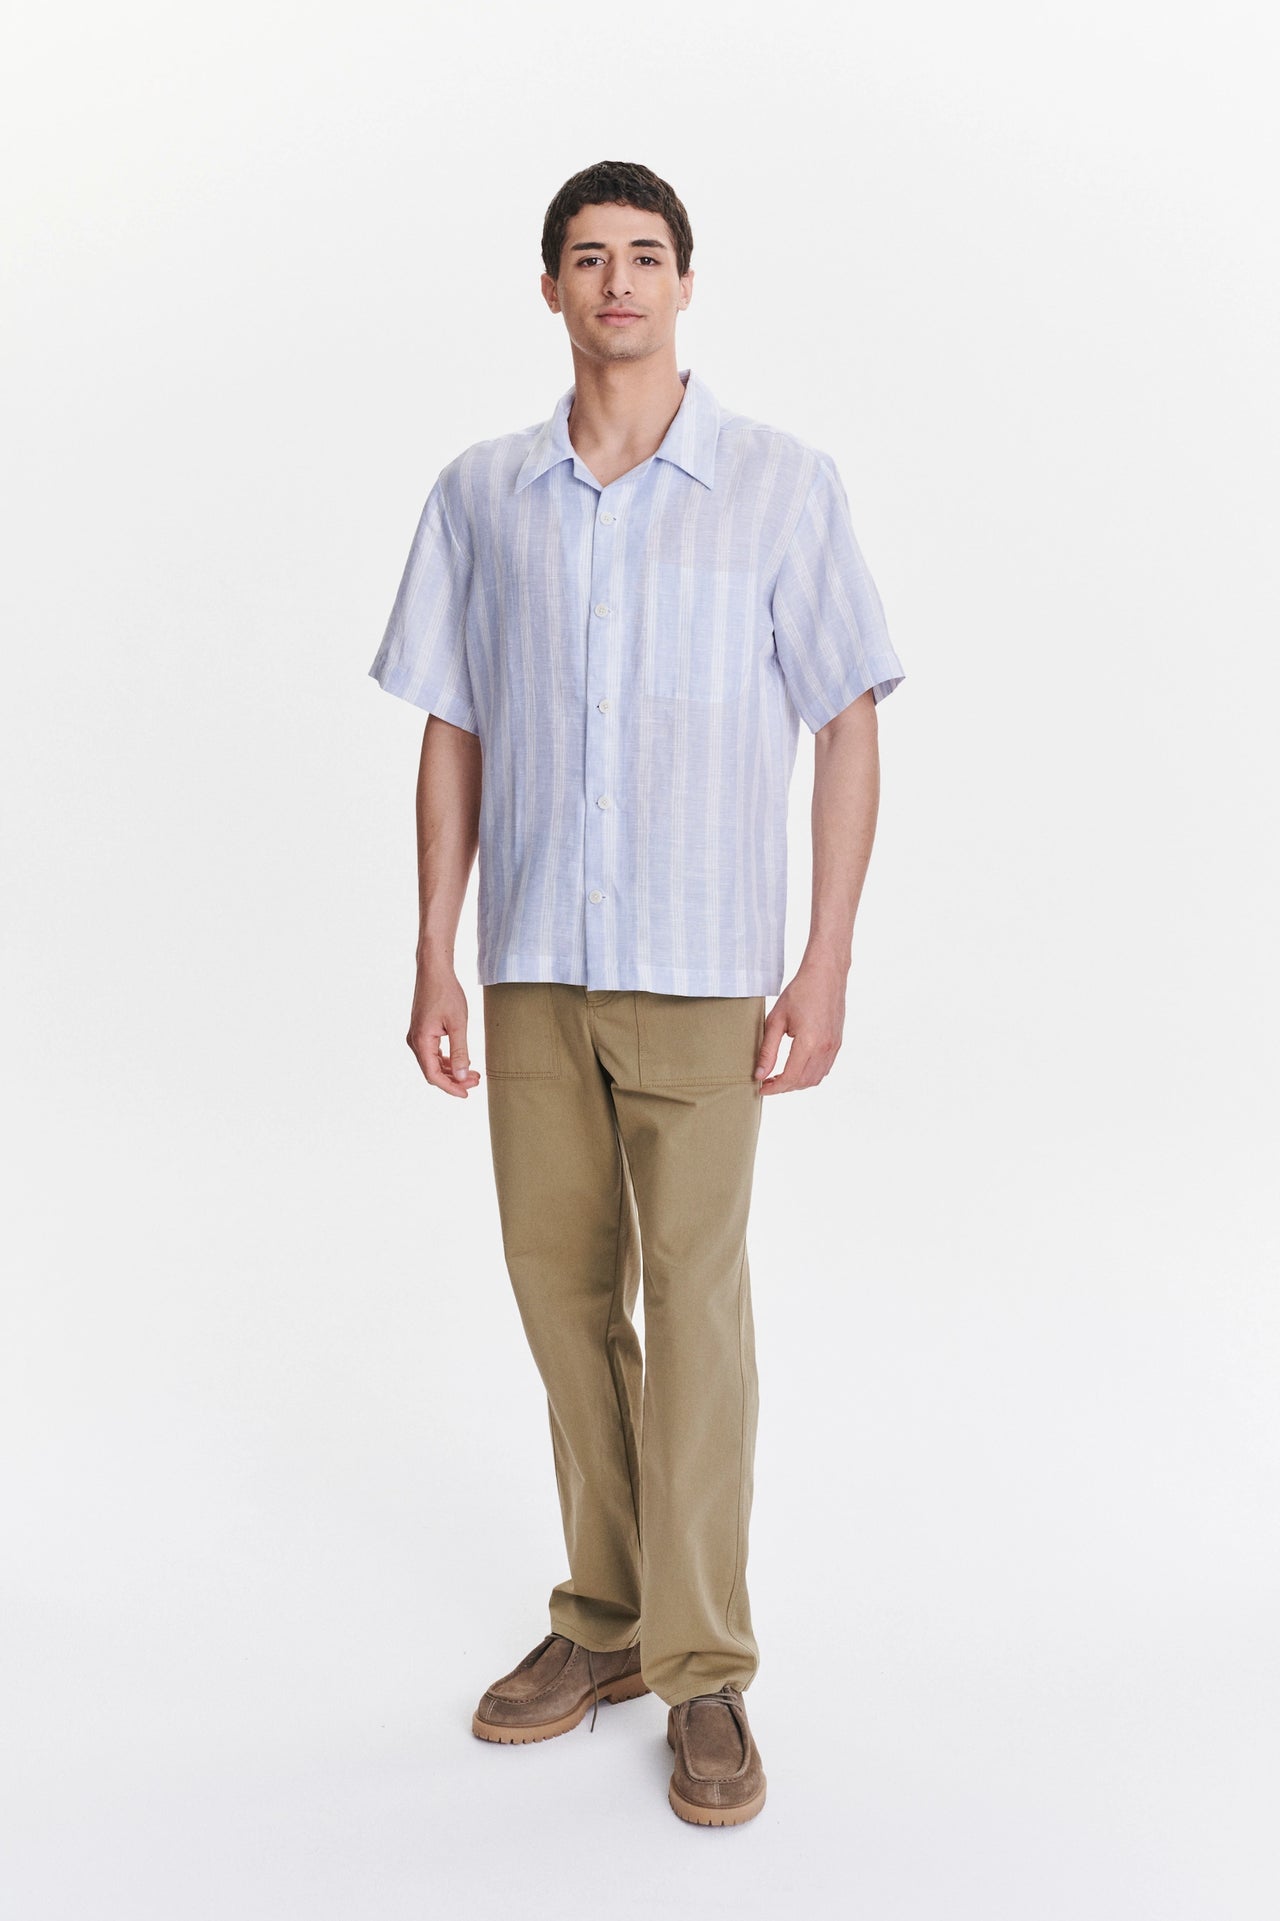 Short Sleeve Cuban Collar Shirt in a Subtle Blue and White Striped Italian Linen